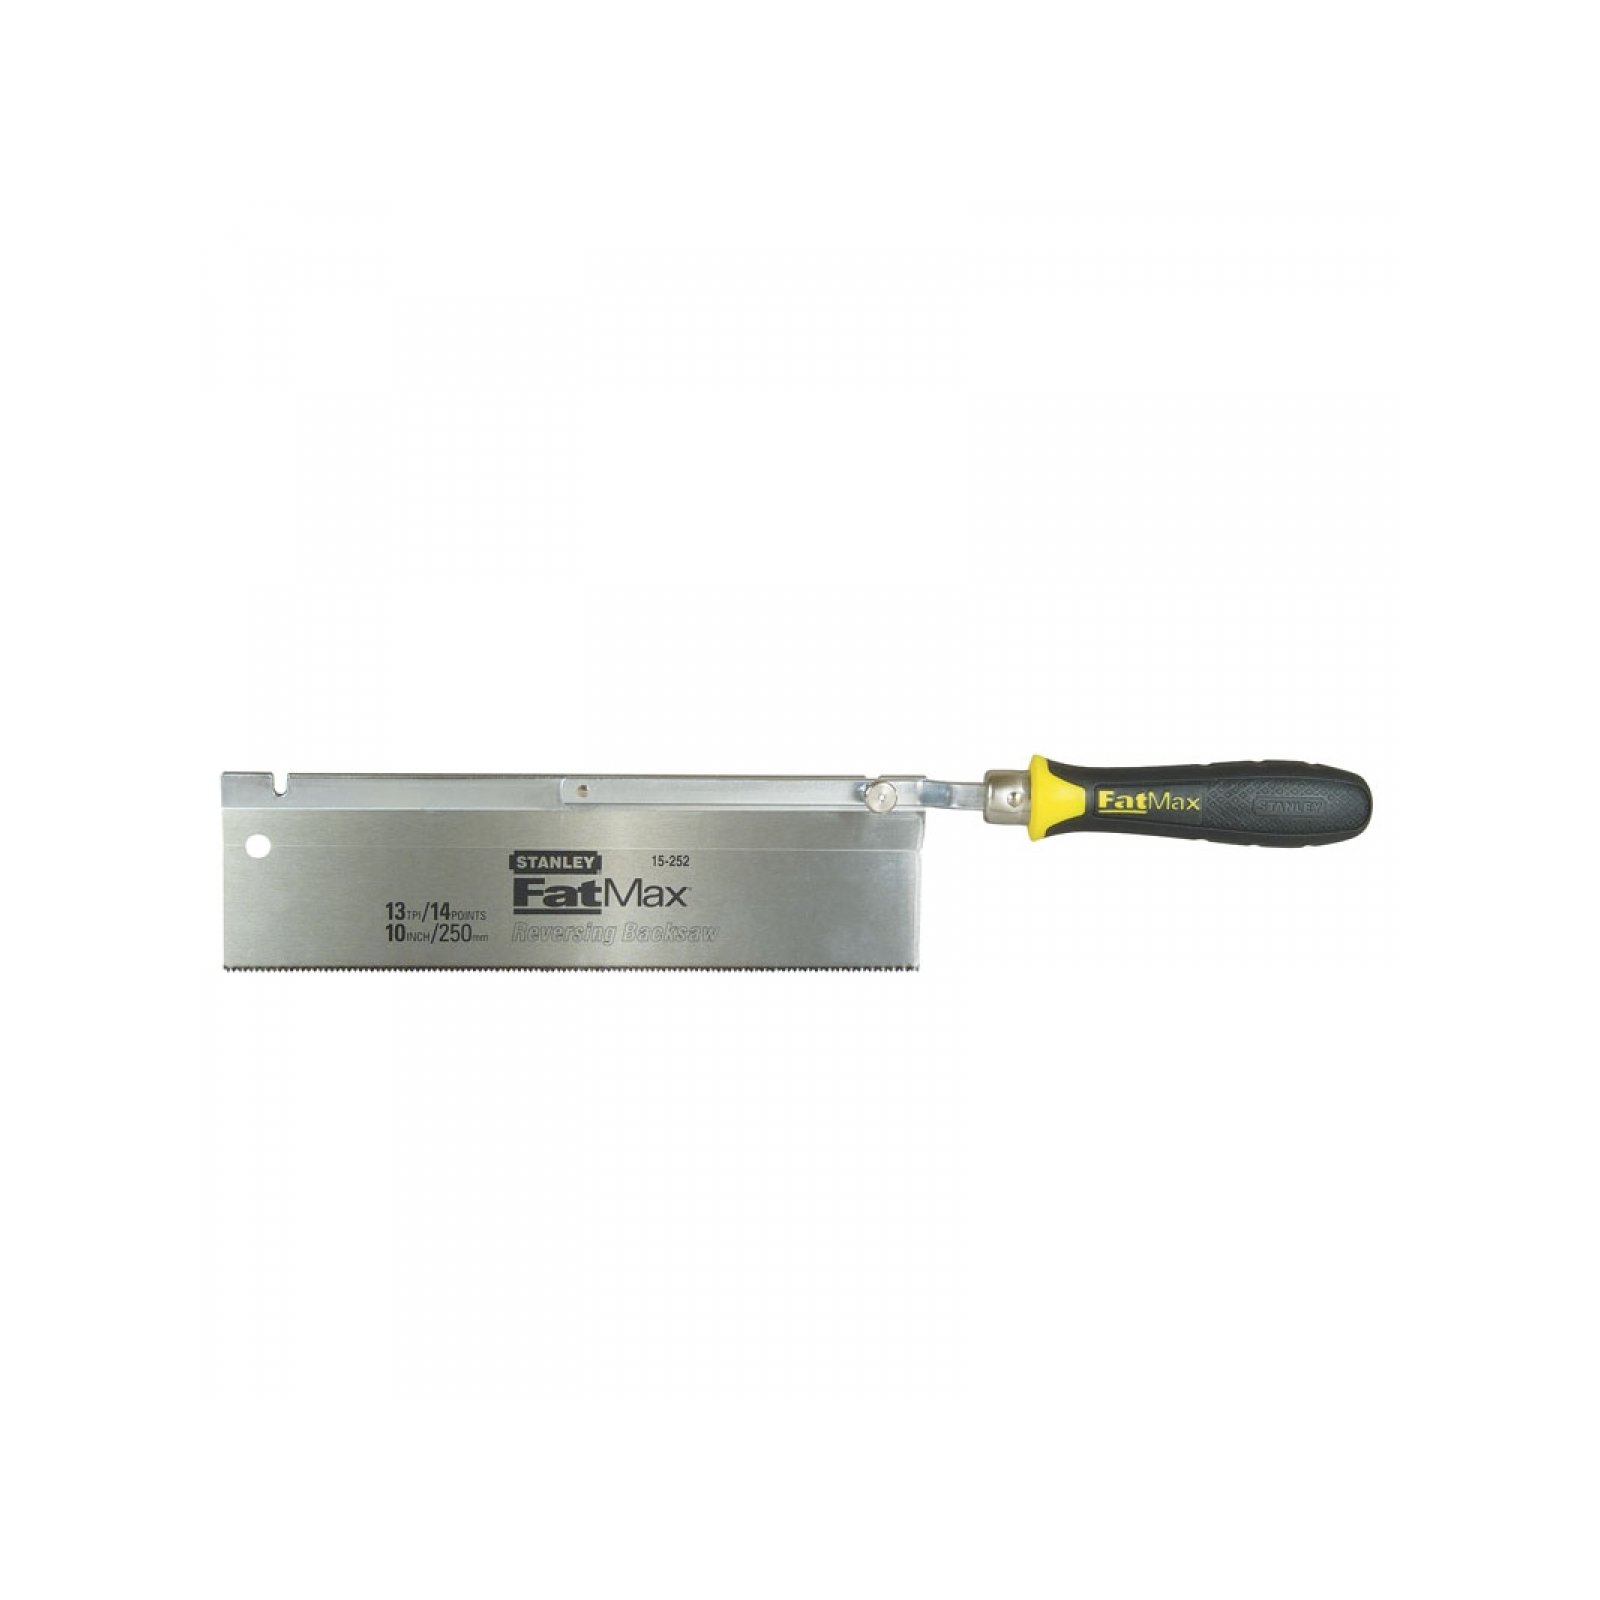 Ножівка Stanley для деревини 250мм FatMax TPI13 (0-15-252)